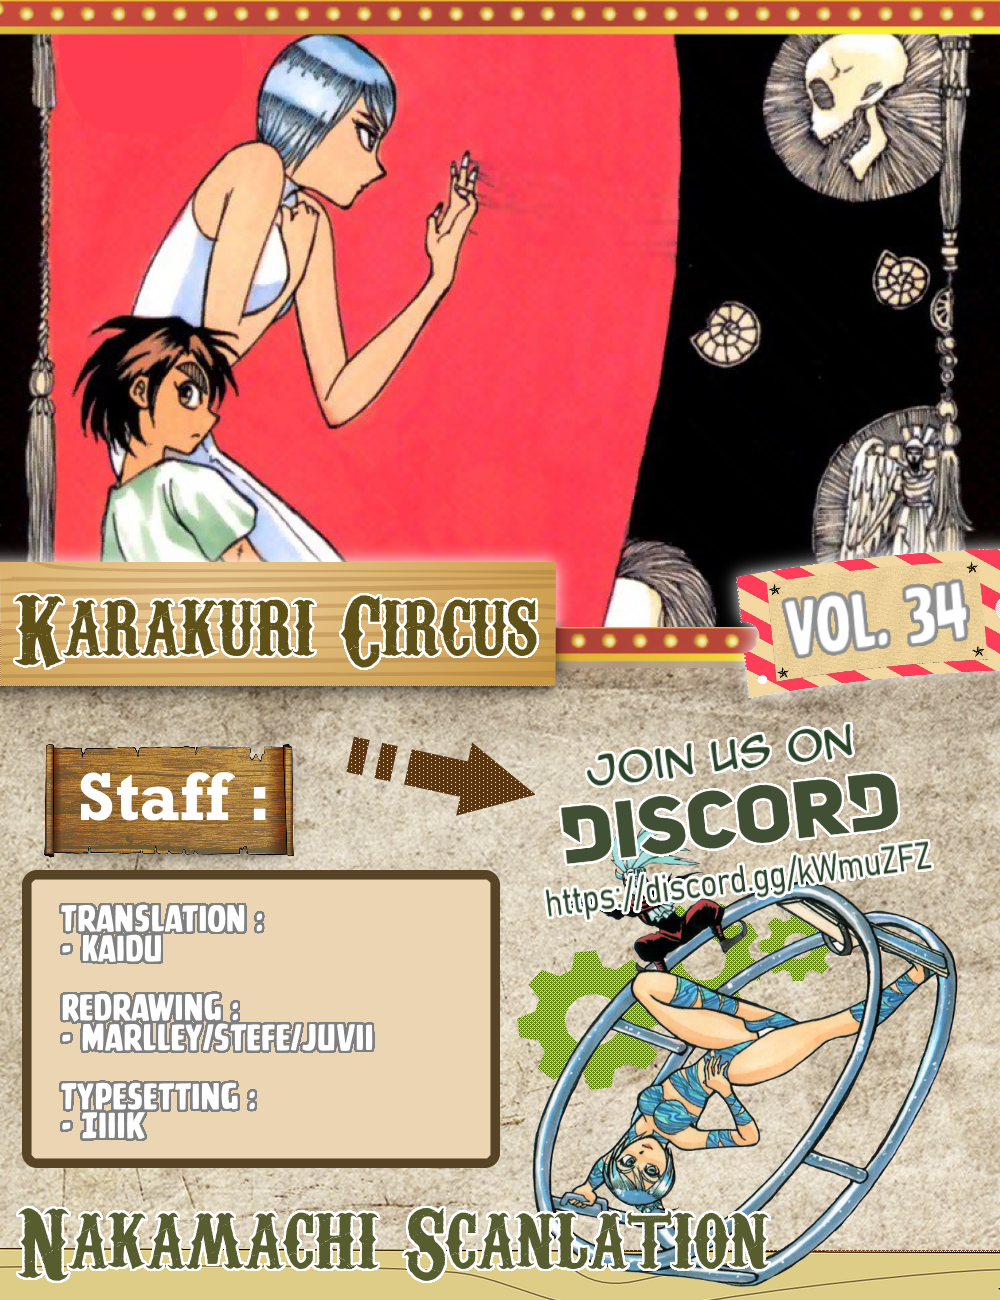 Karakuri Circus Chapter 326: Main Part - Summer At Kuroga Village - Act 8: Summer Festival - Picture 1